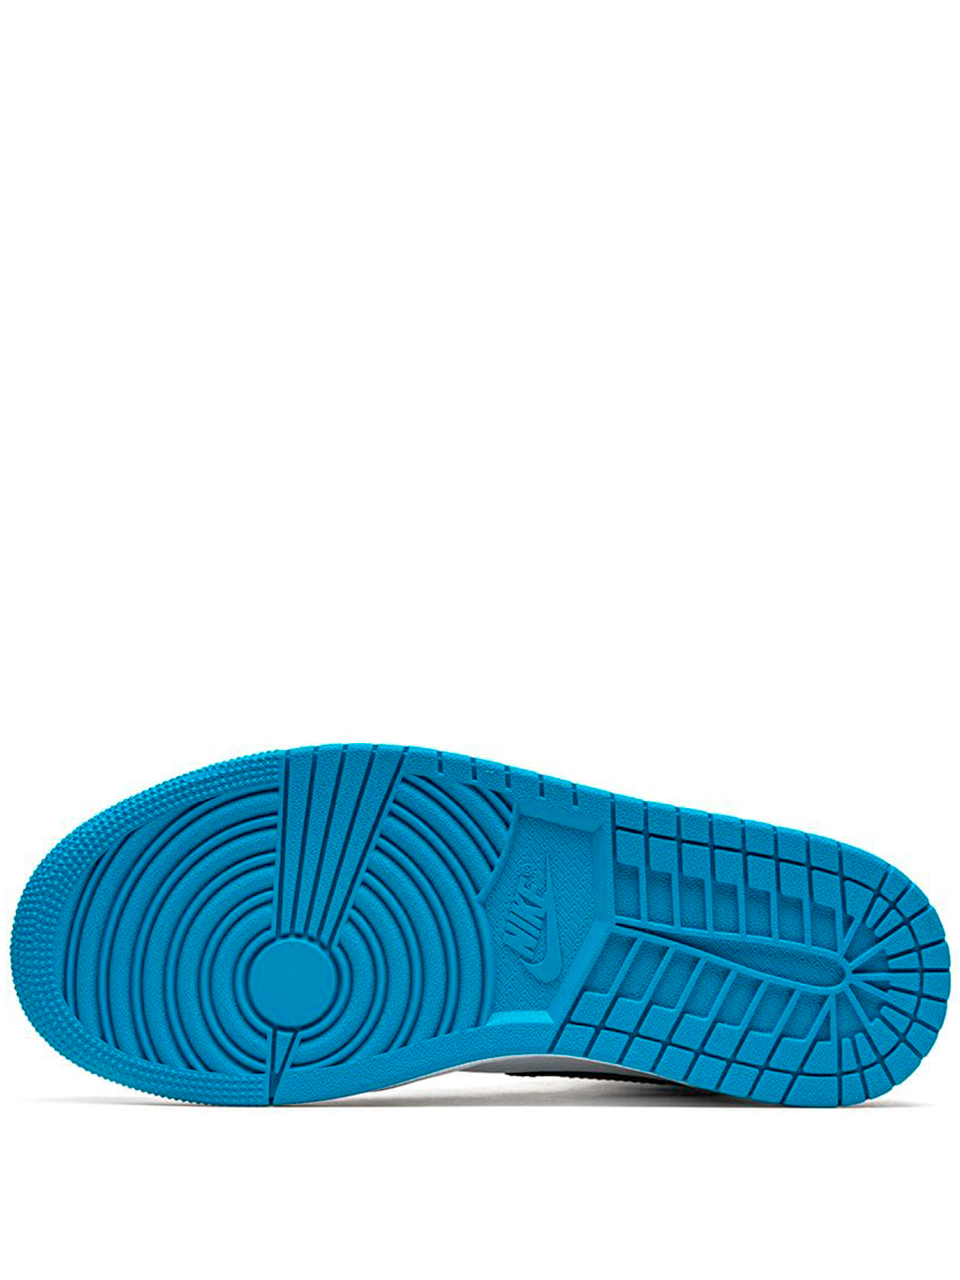 Imagem de: Tênis Nike Air Jordan 1 Mid Branco e Azul